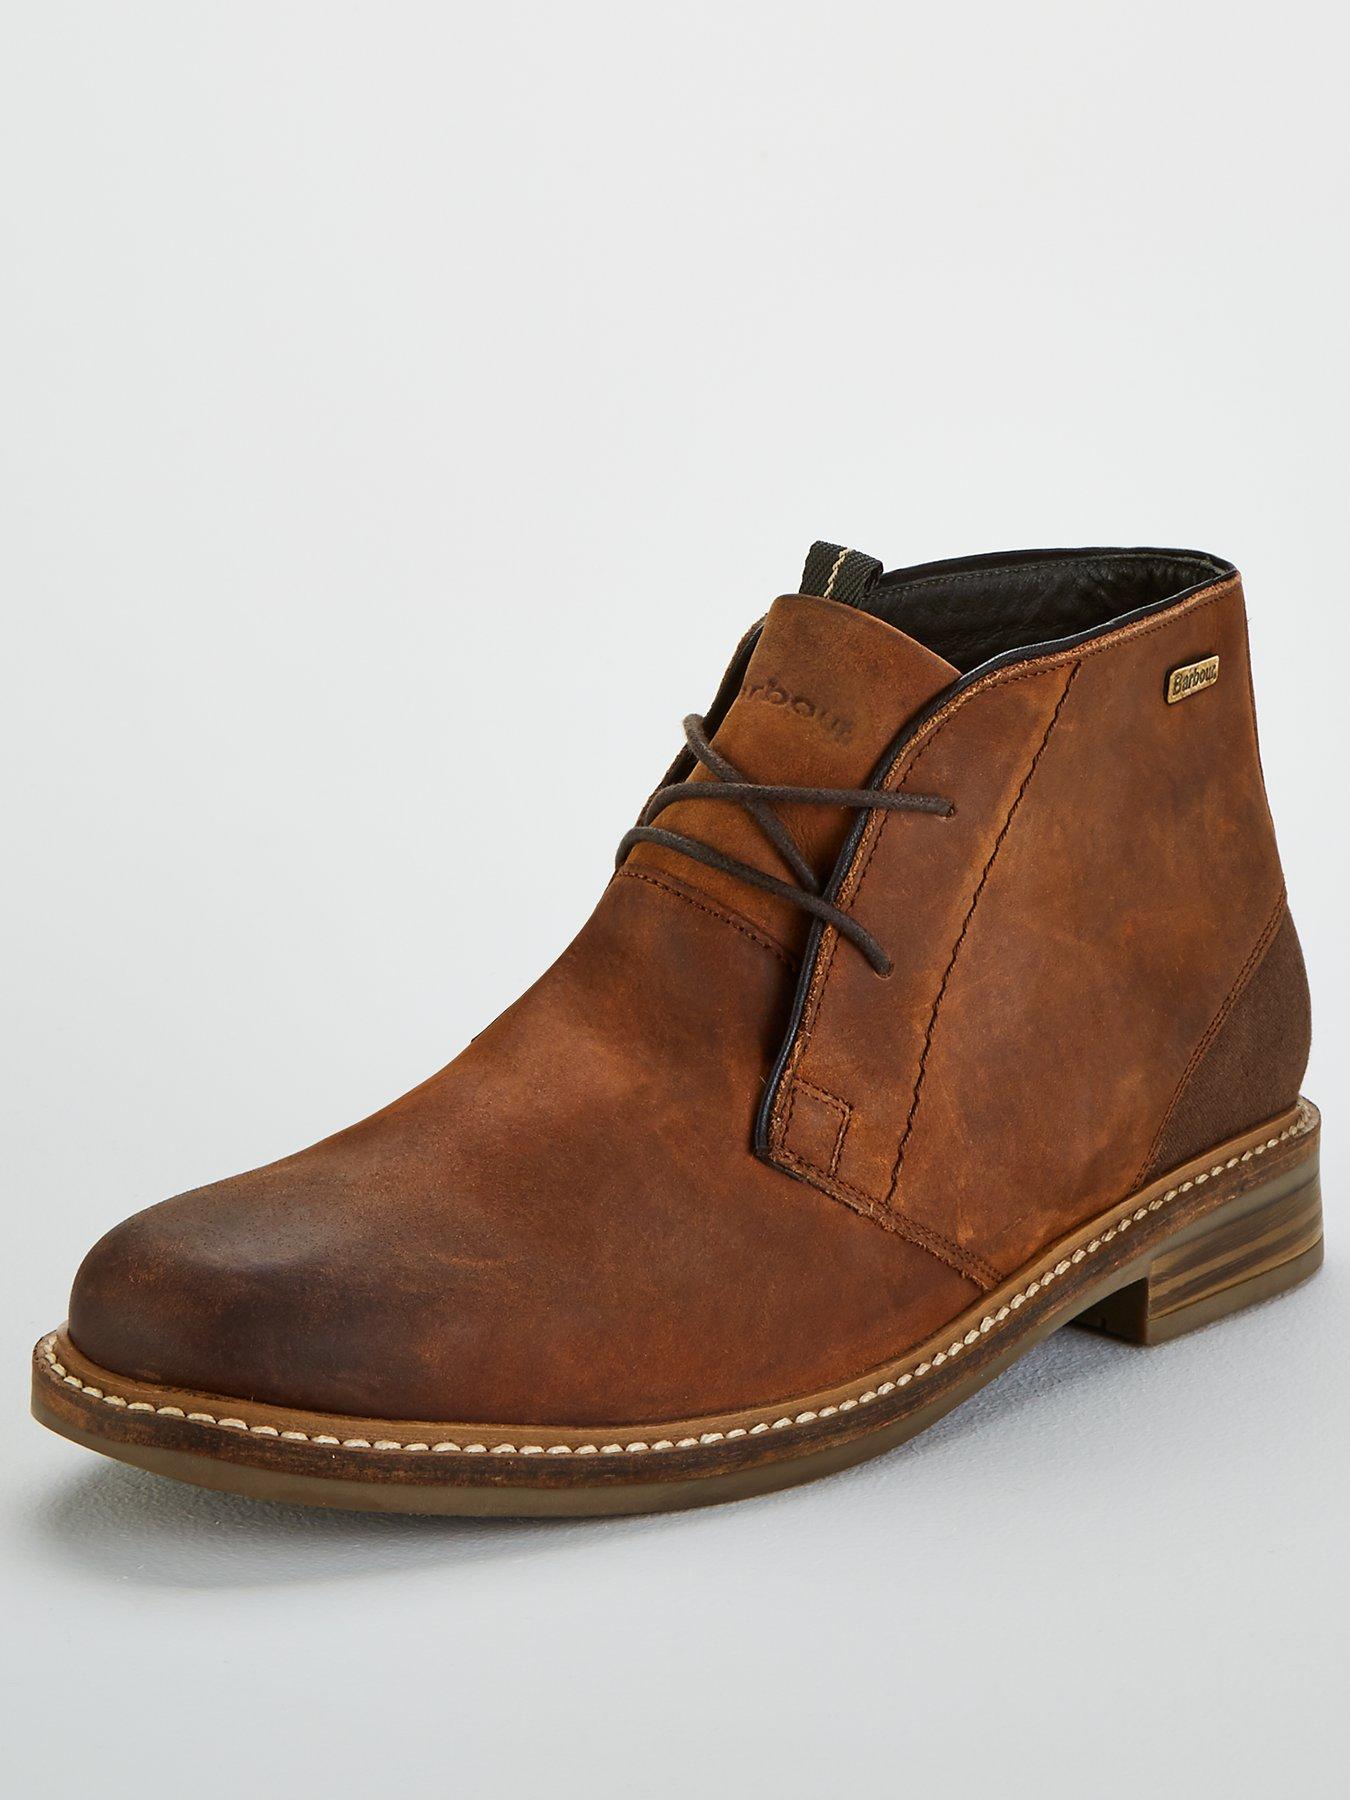 barbour readhead chukka boots brown